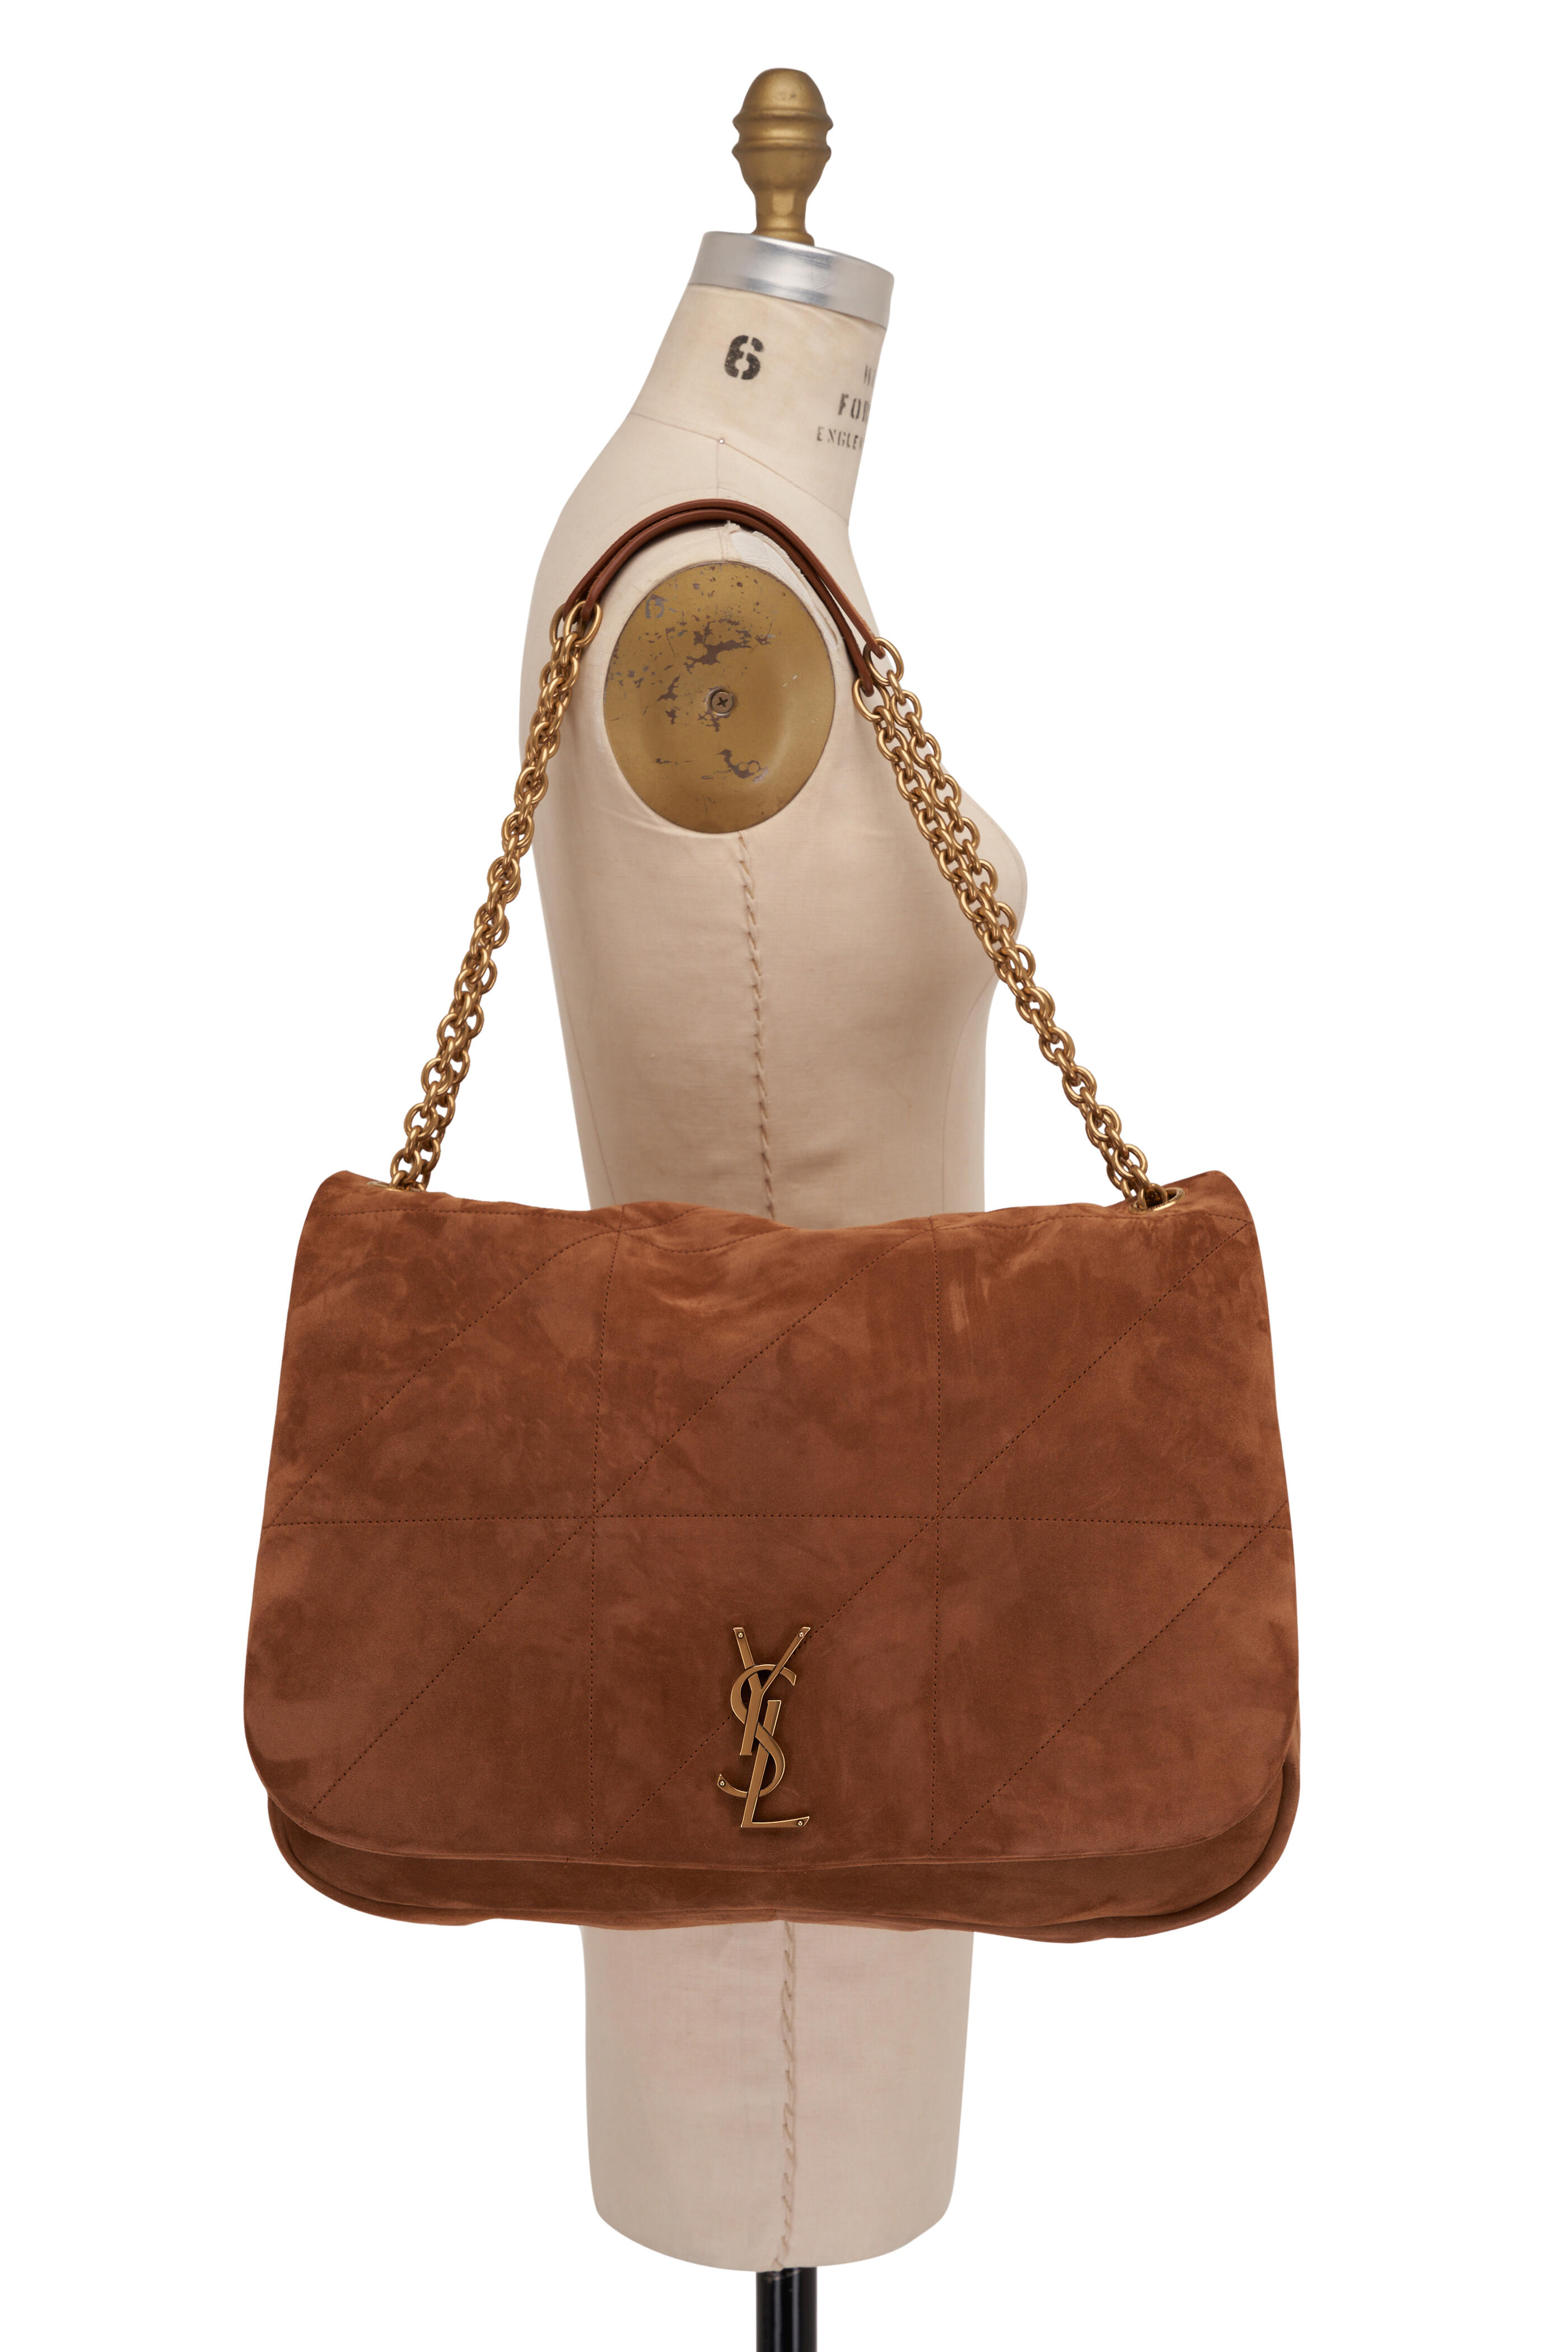 Saint Laurent Jamie Quilted Shoulder Bag, Leather Bag, in Brown